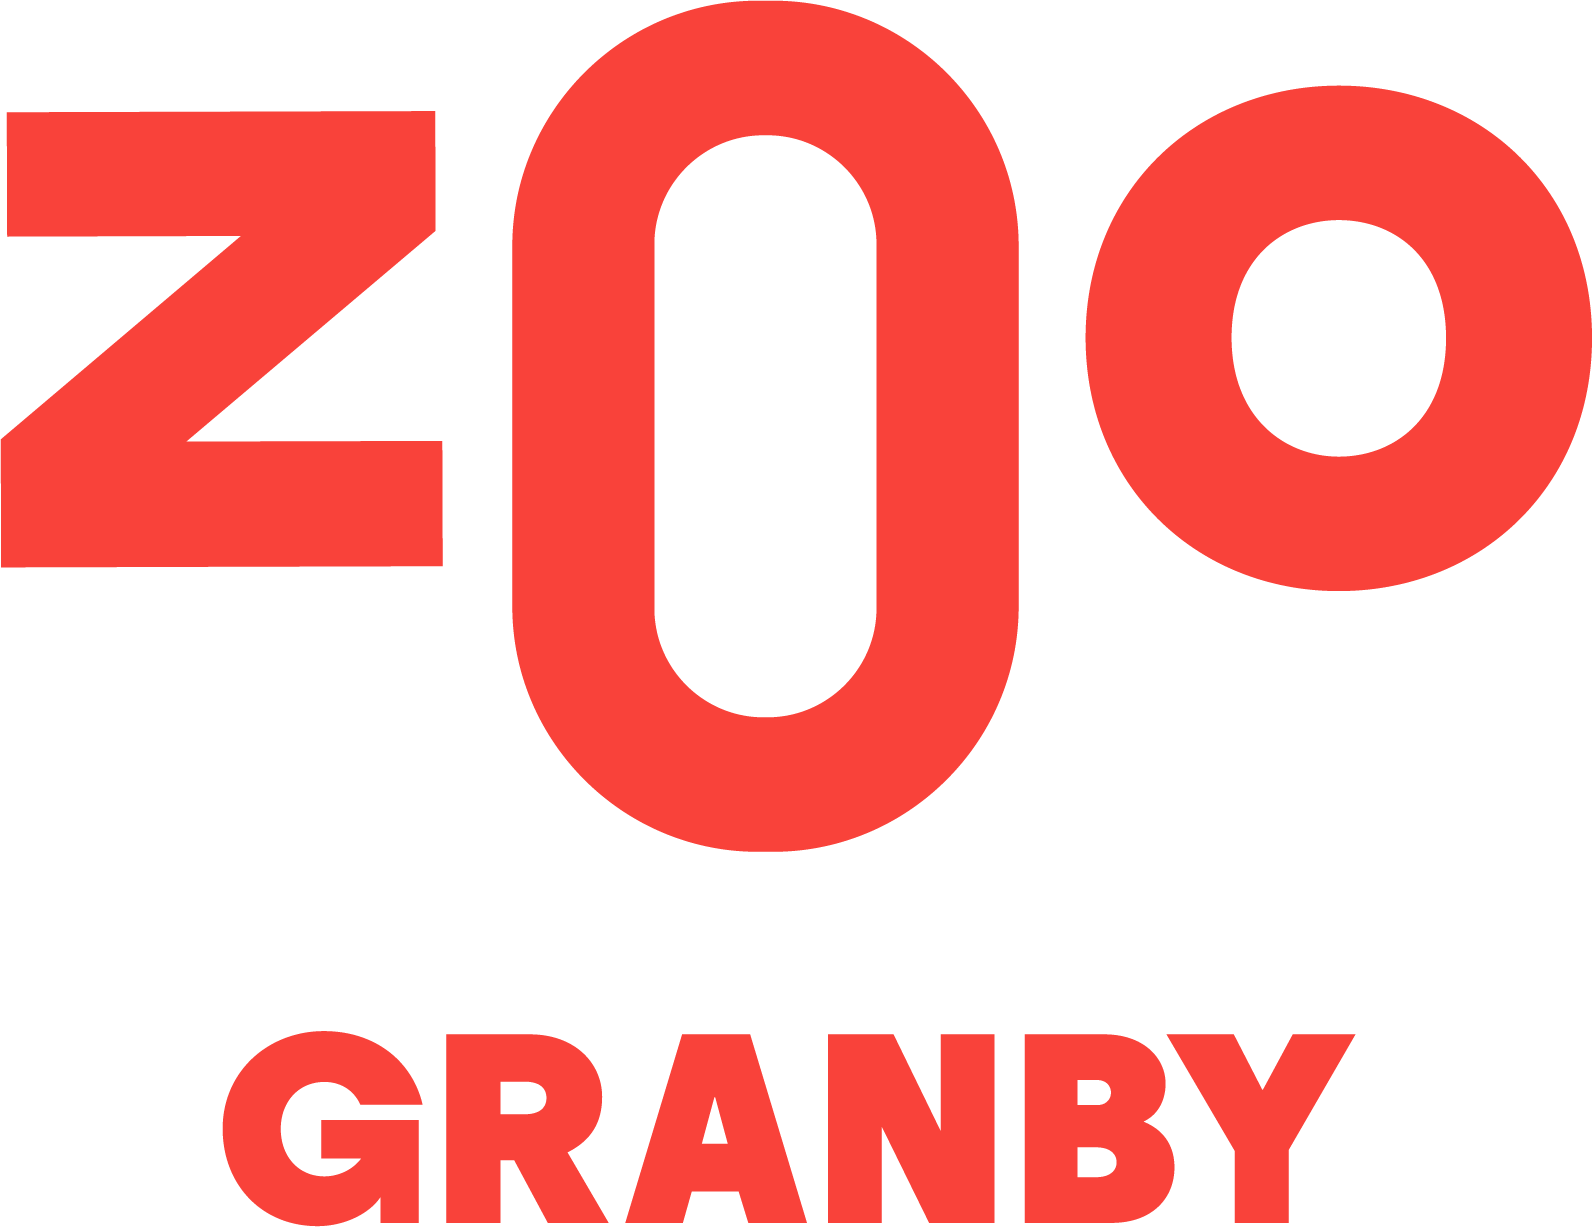 Zoo_Granby_logo